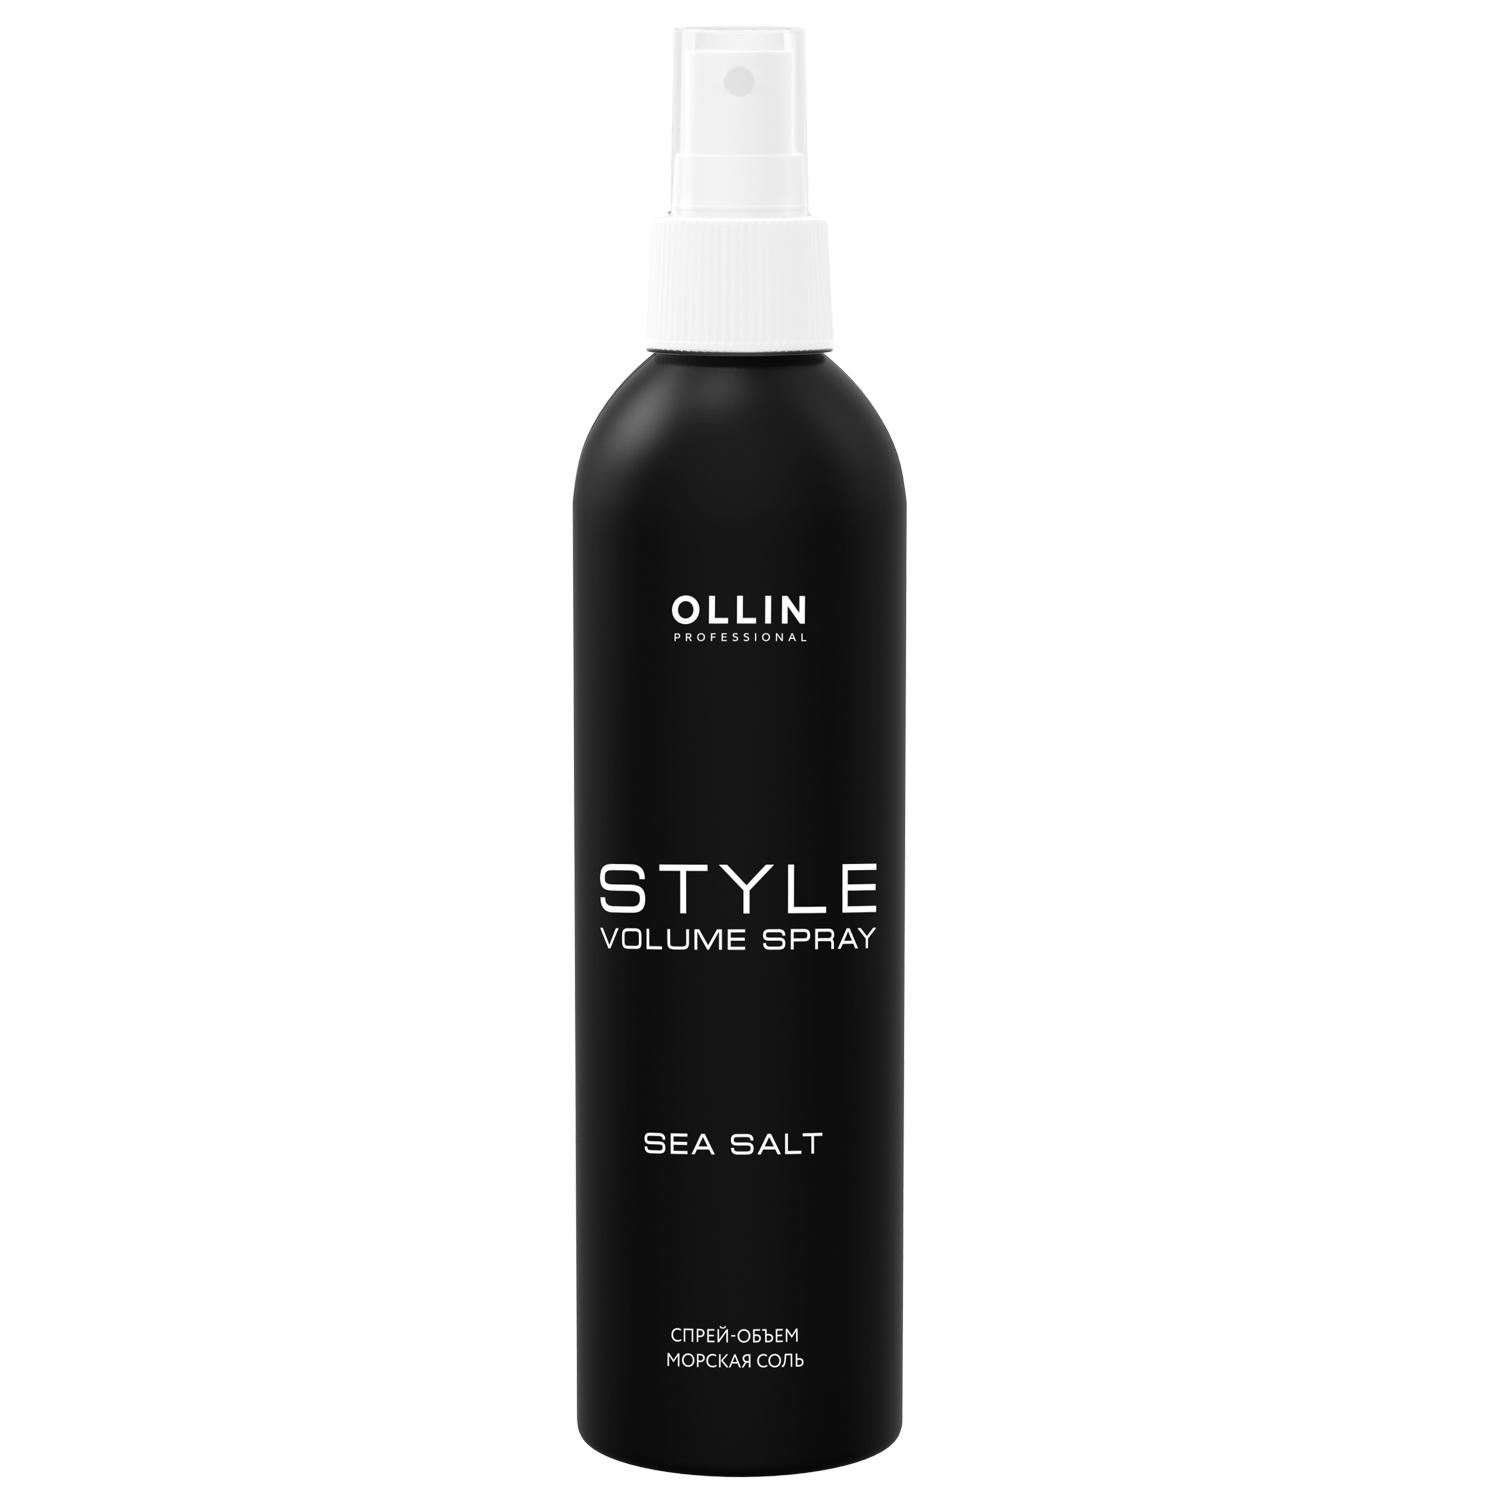 Ollin Professional Спрей-объем Морская соль, 250 мл (Ollin Professional, Style) спрей объем морская соль ollin style 250мл